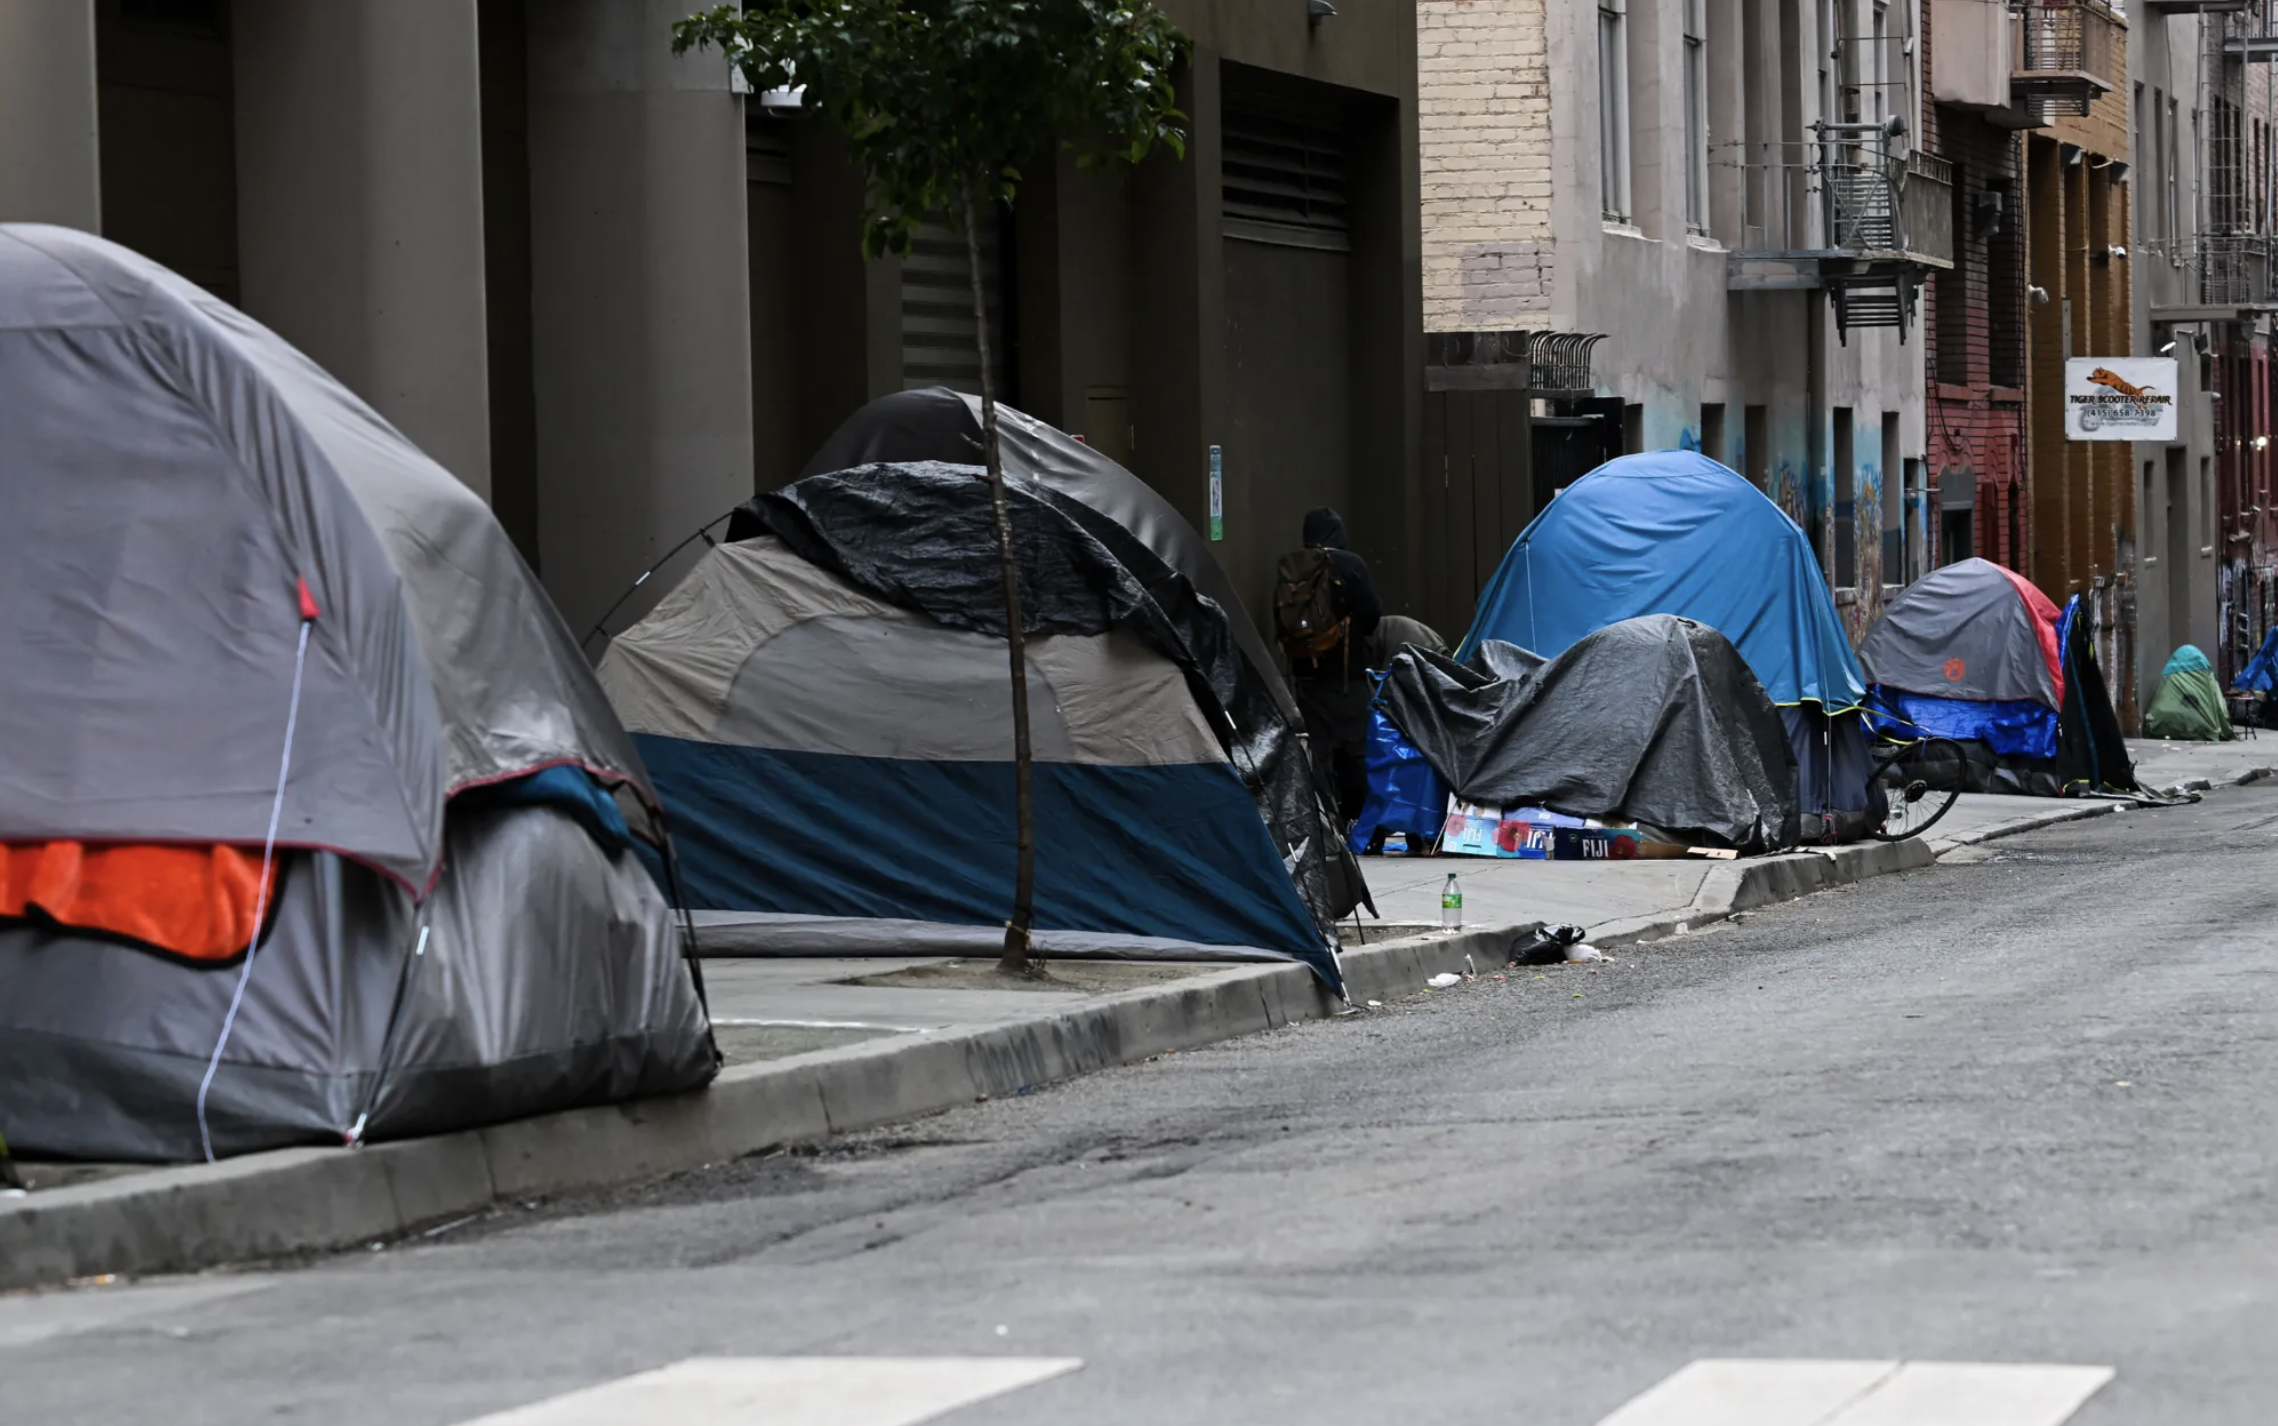 Tents on San Francisco street.